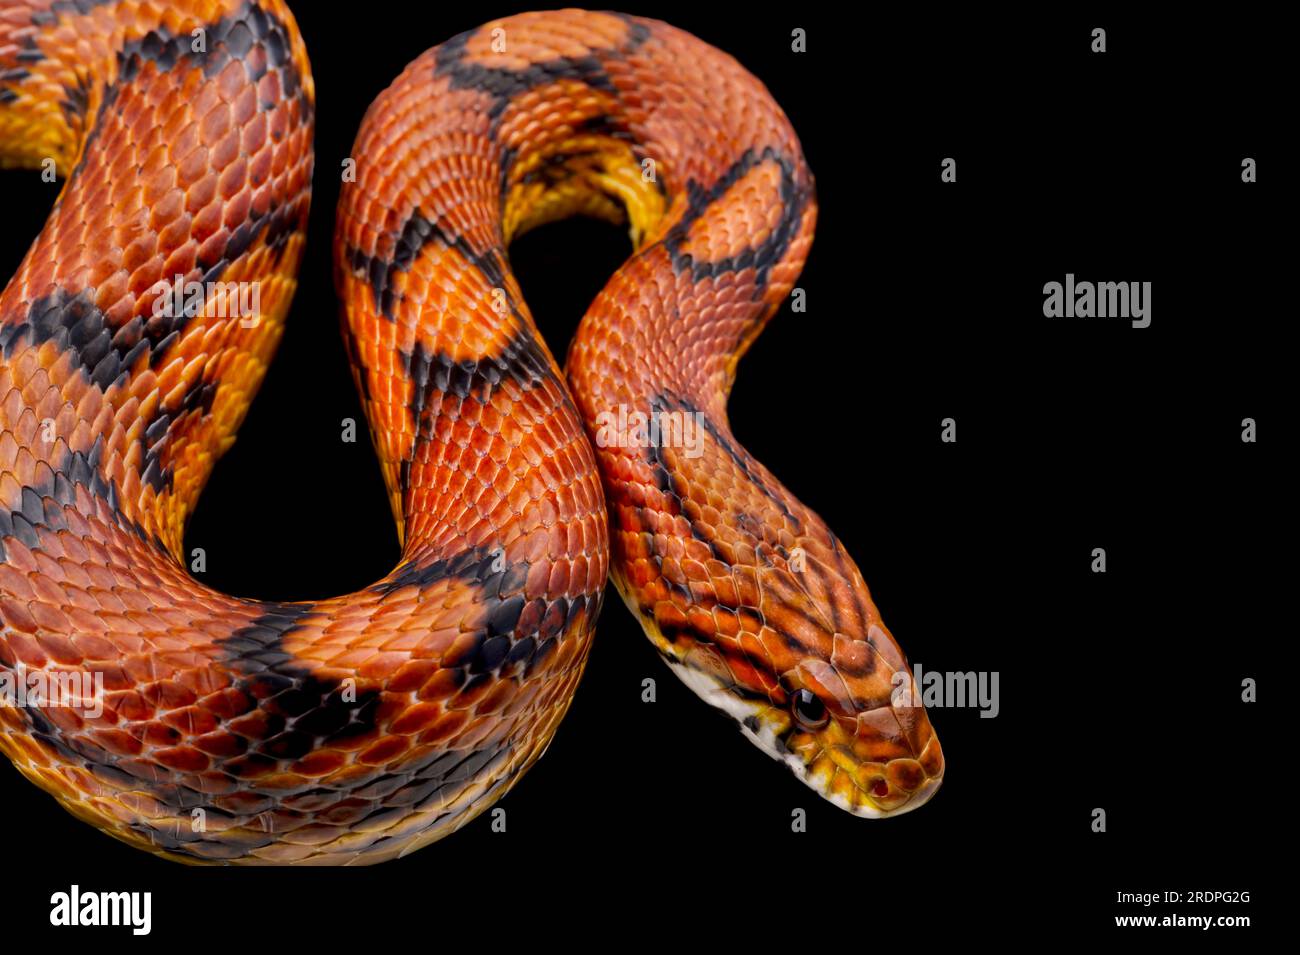 Corn snake (Pantherophis guttatus) Stock Photo